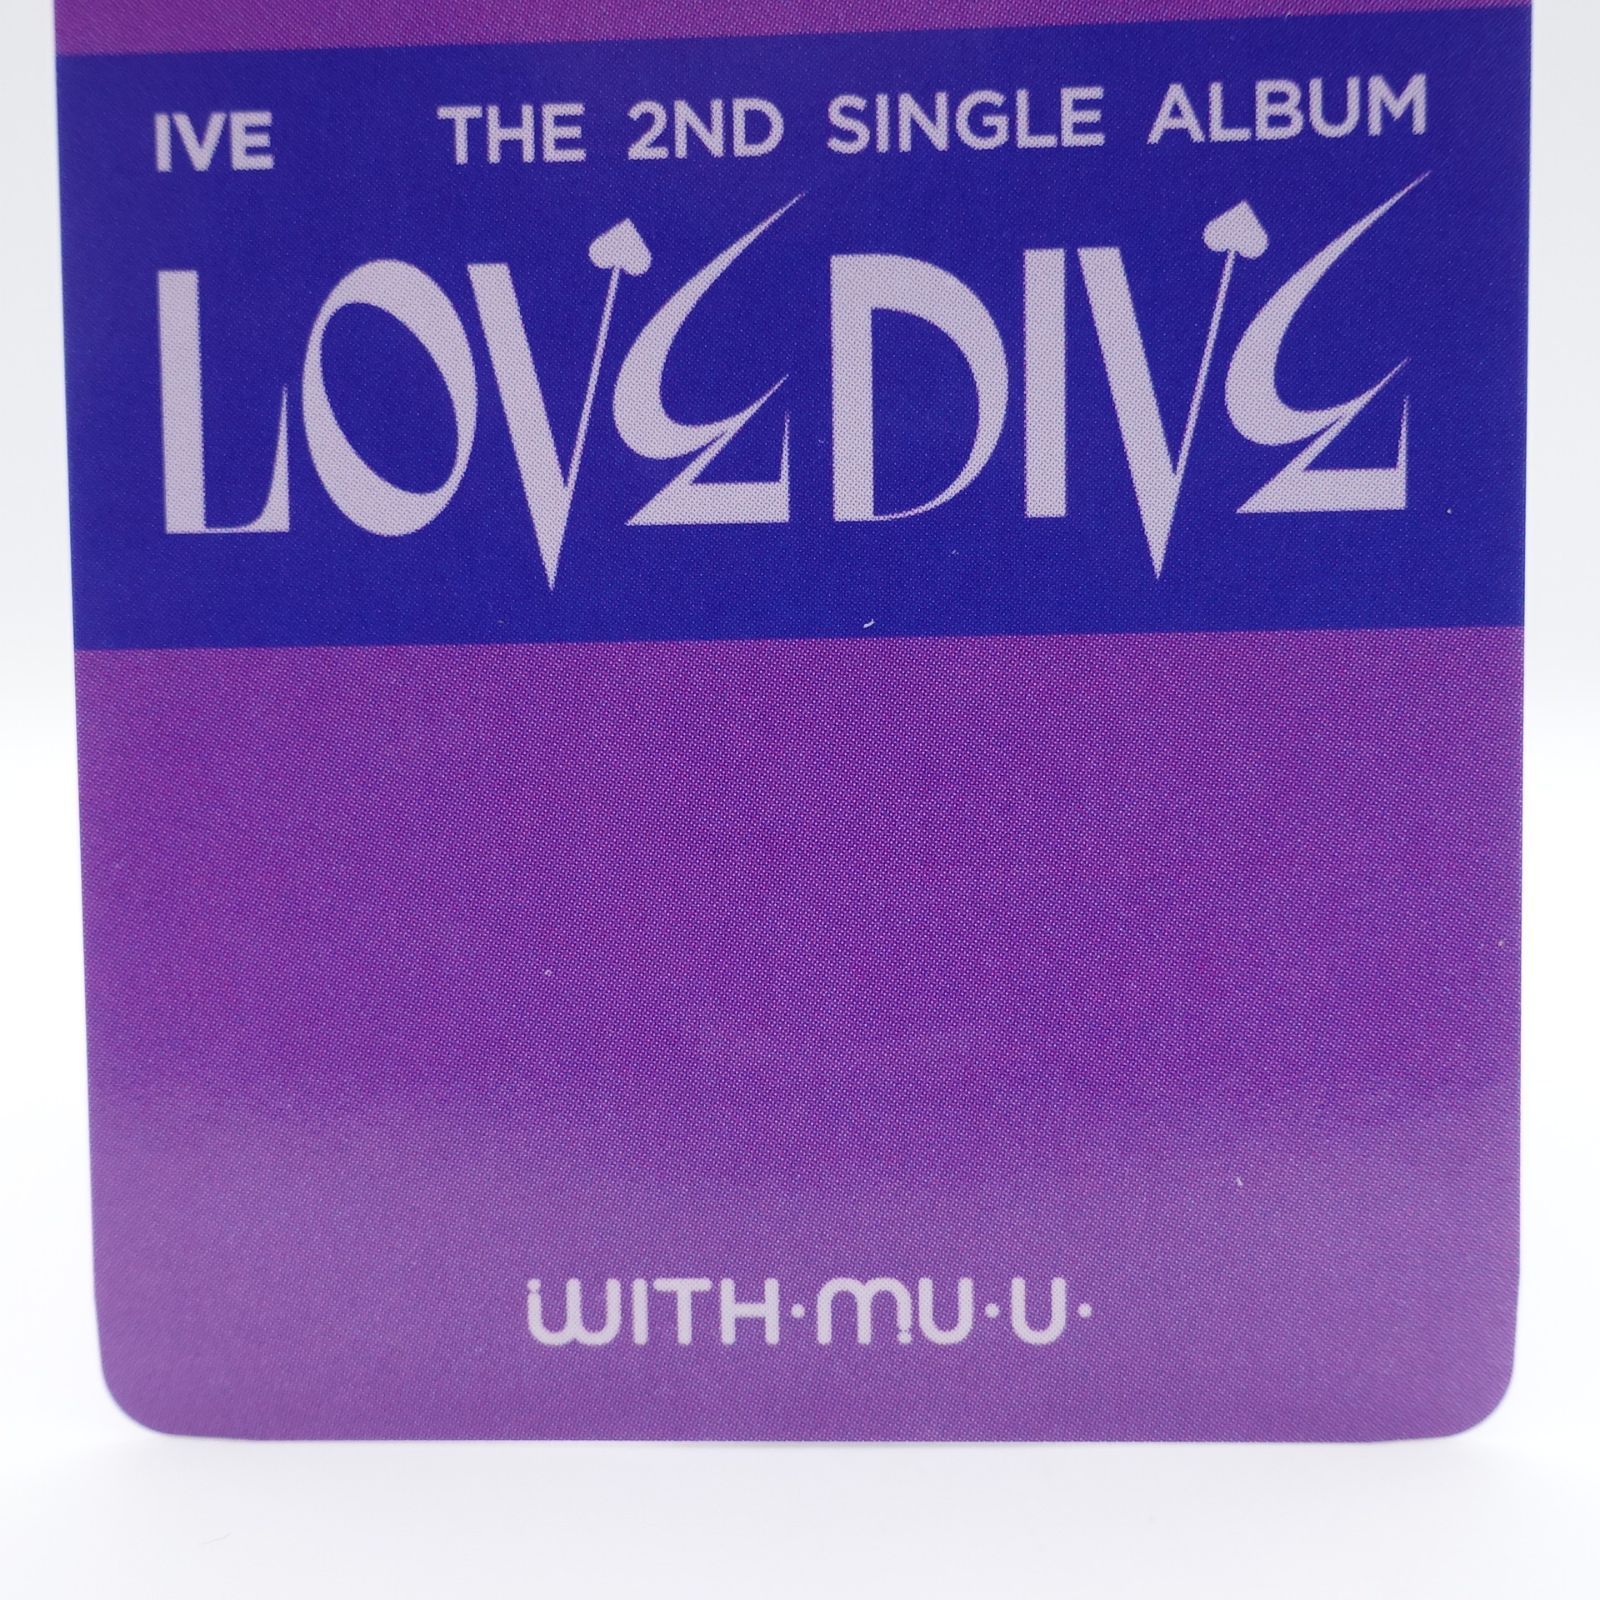 IVE LOVE DIVE ユジン トレカ フォト カード WITHMUU ヨントン 特典 